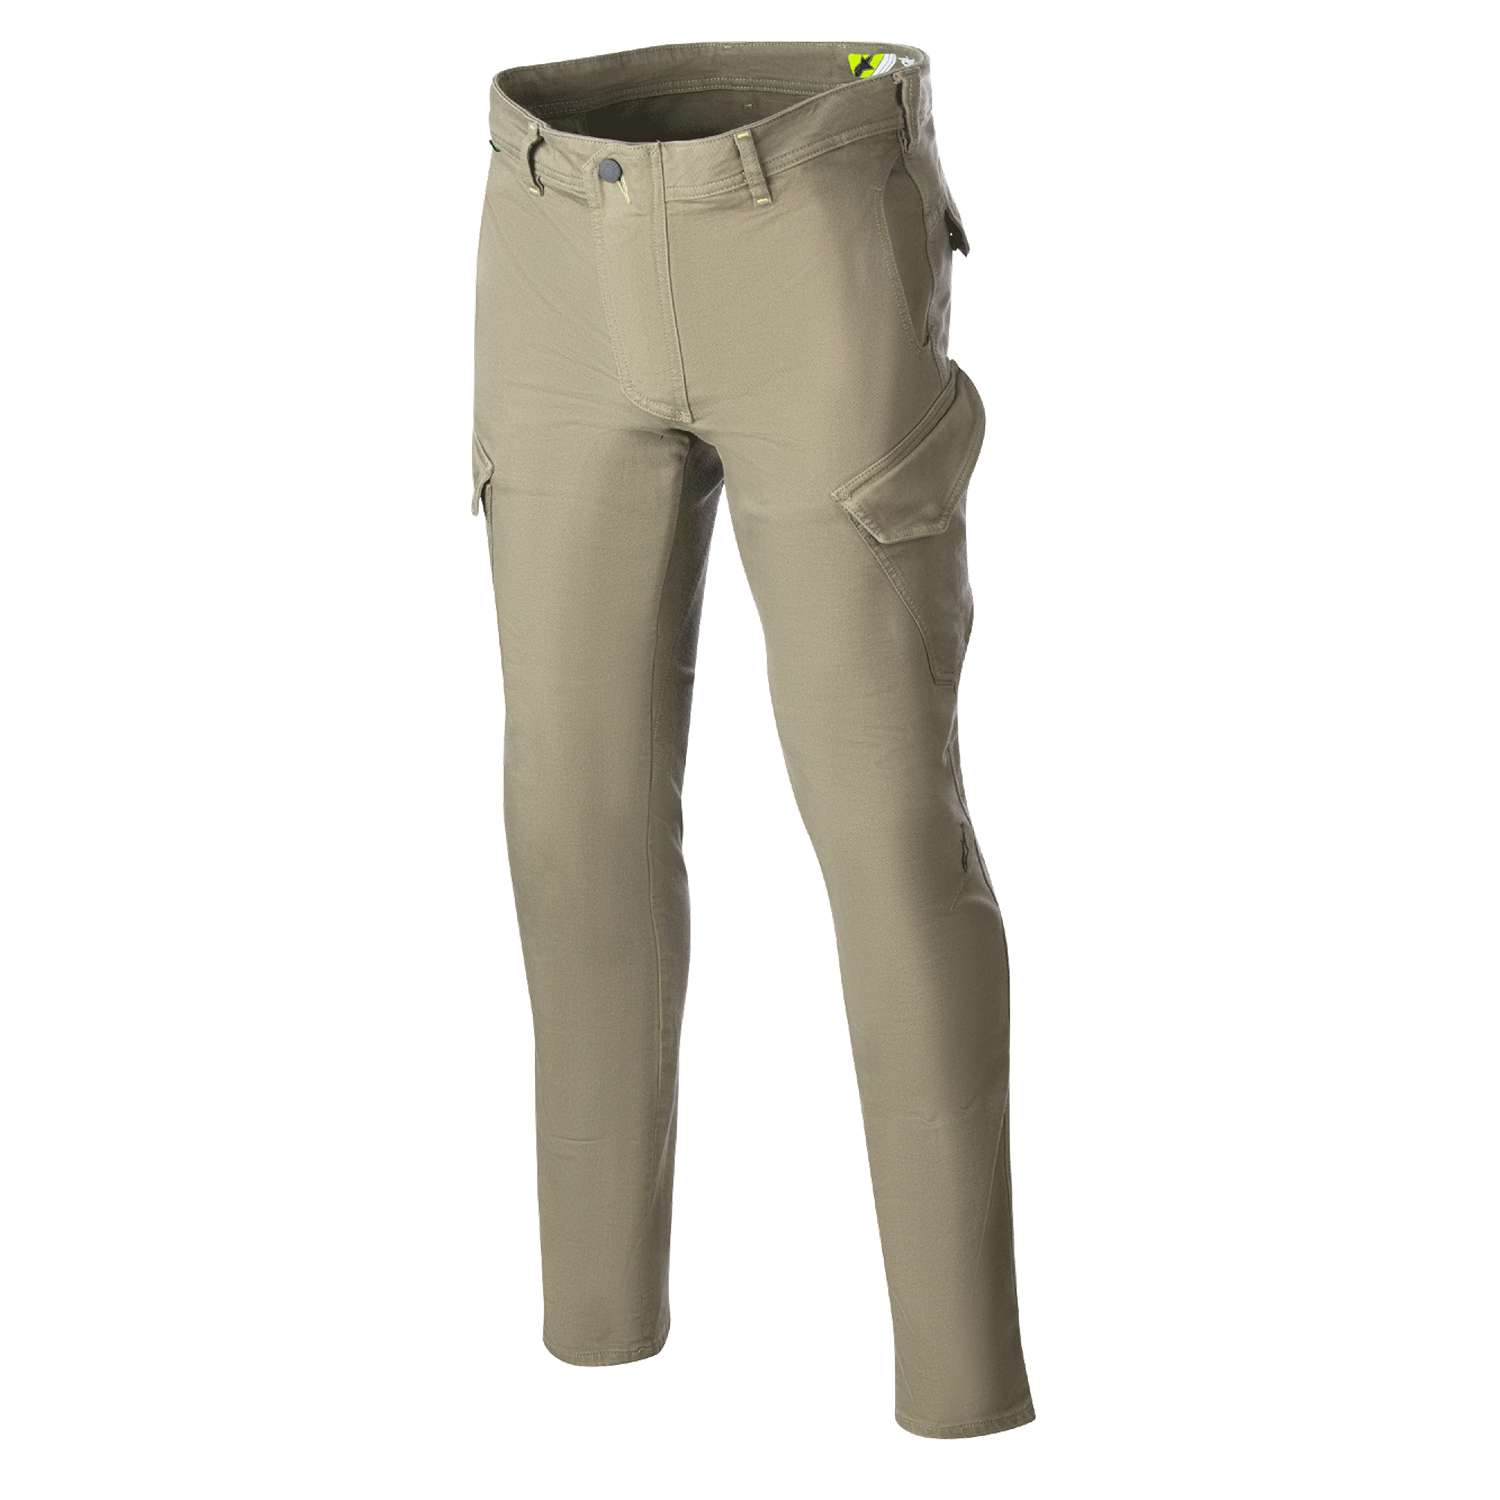 Image of Alpinestars Caliber Slim Fit Tech Riding Pants Military Green Size 30 ID 8059347165219